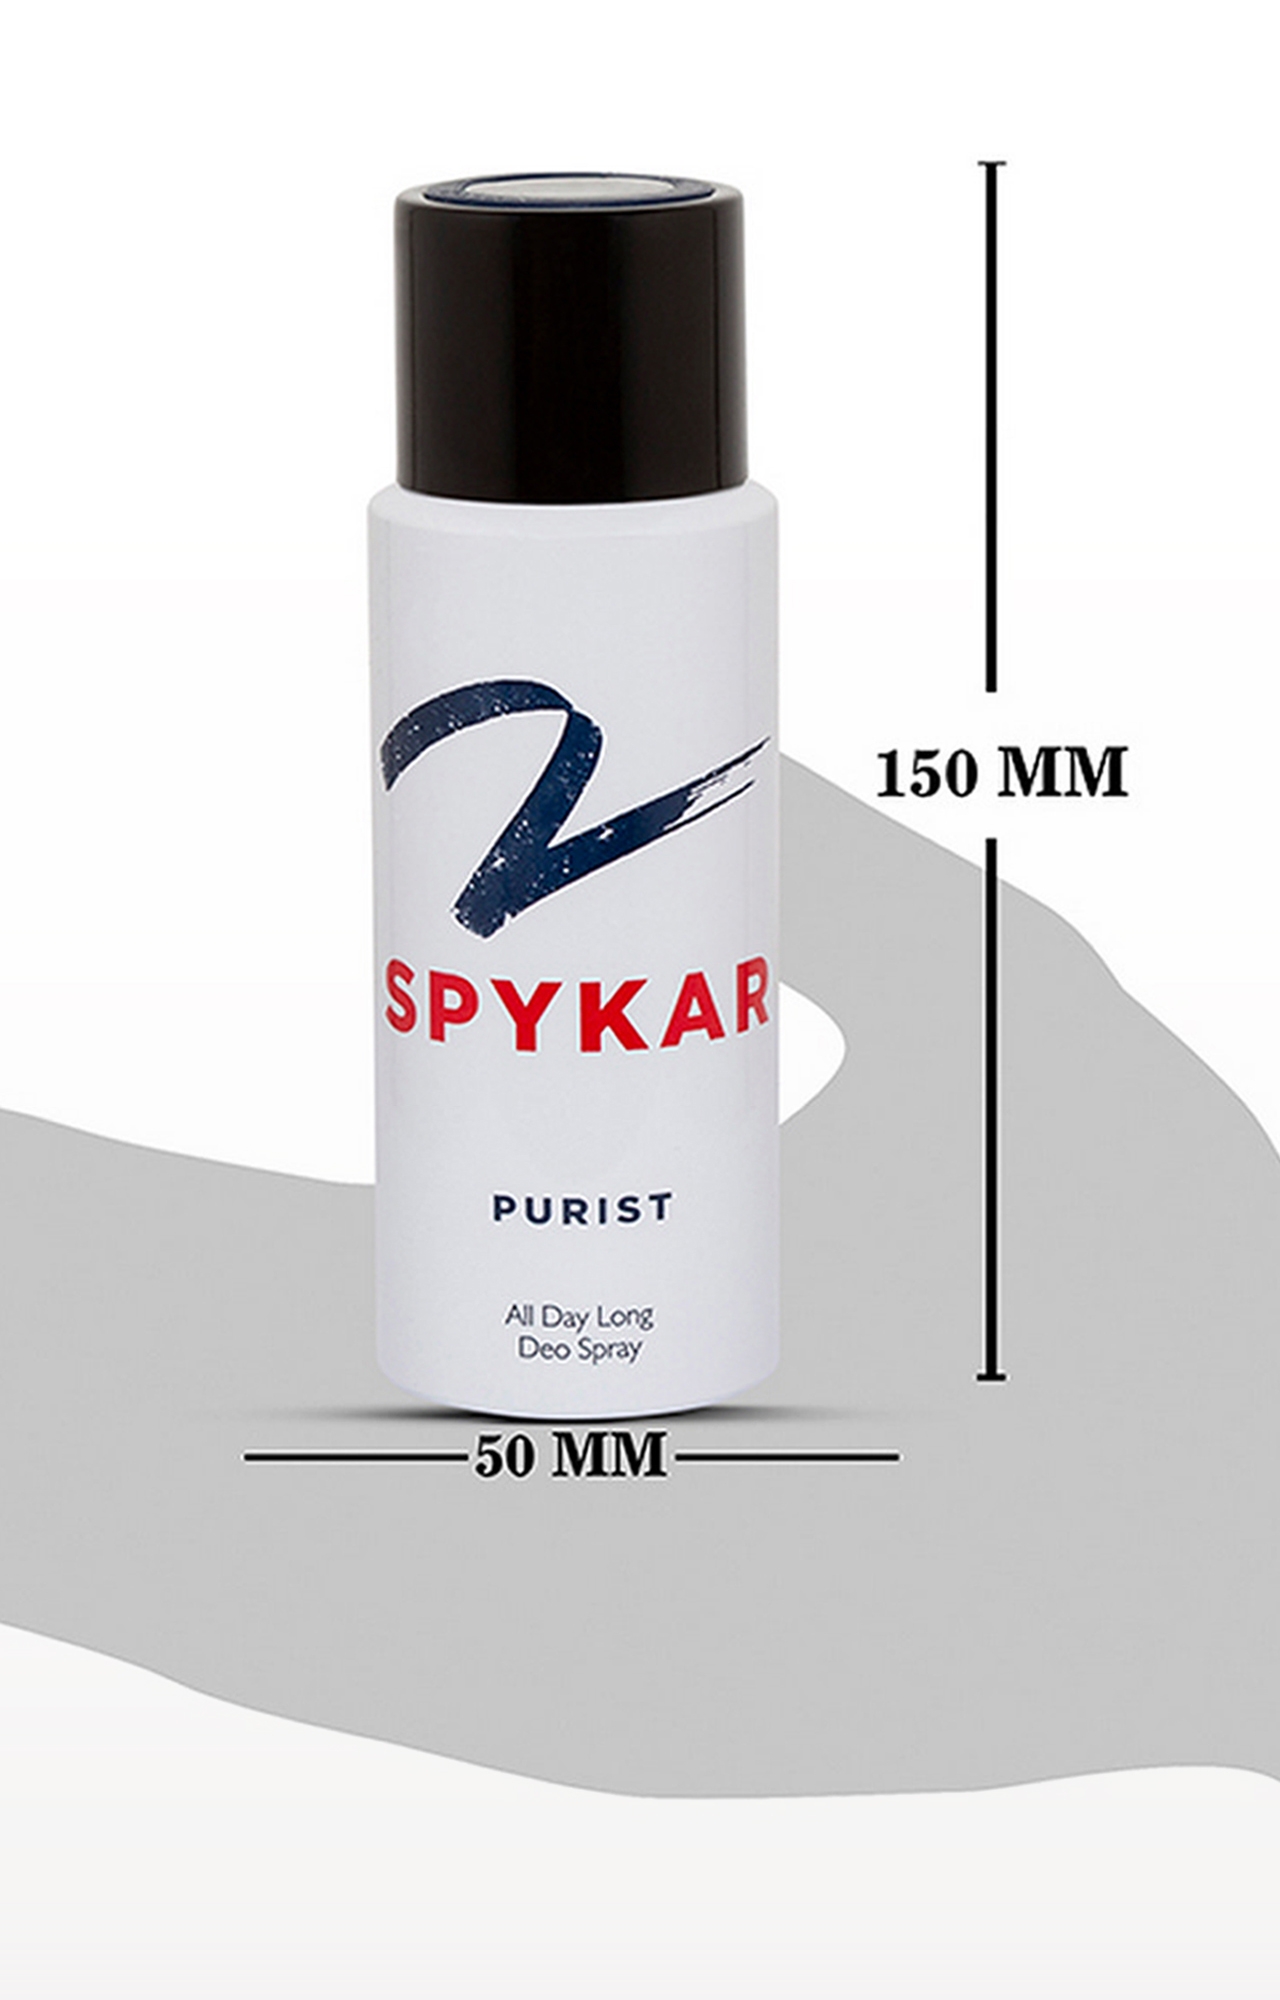 spykar | Spykar White Purist Deodorant 5